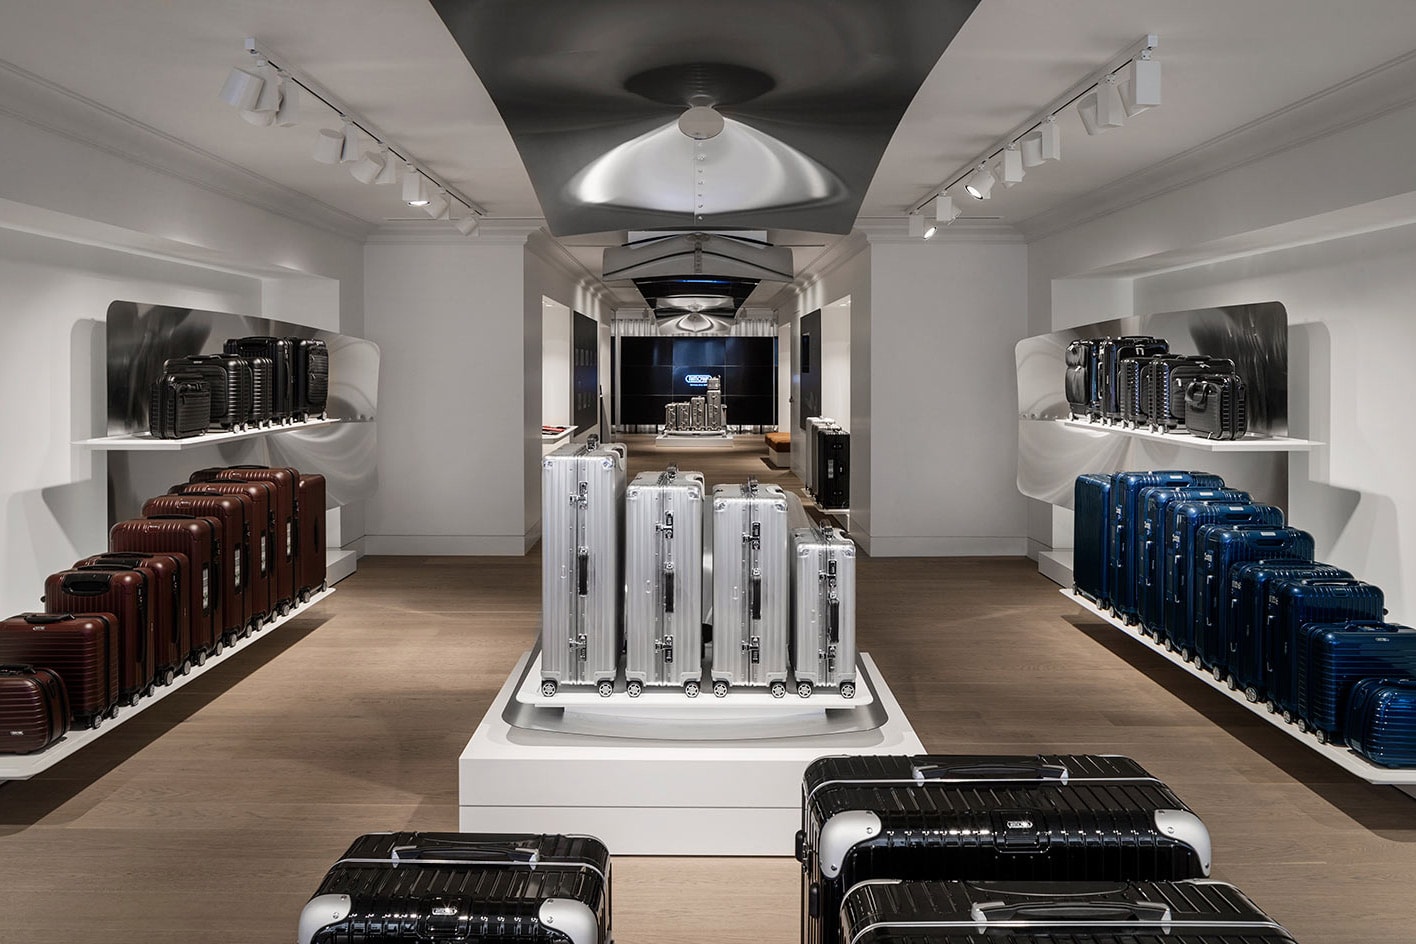 Rimowa opens new concept store in Pavilion Elite